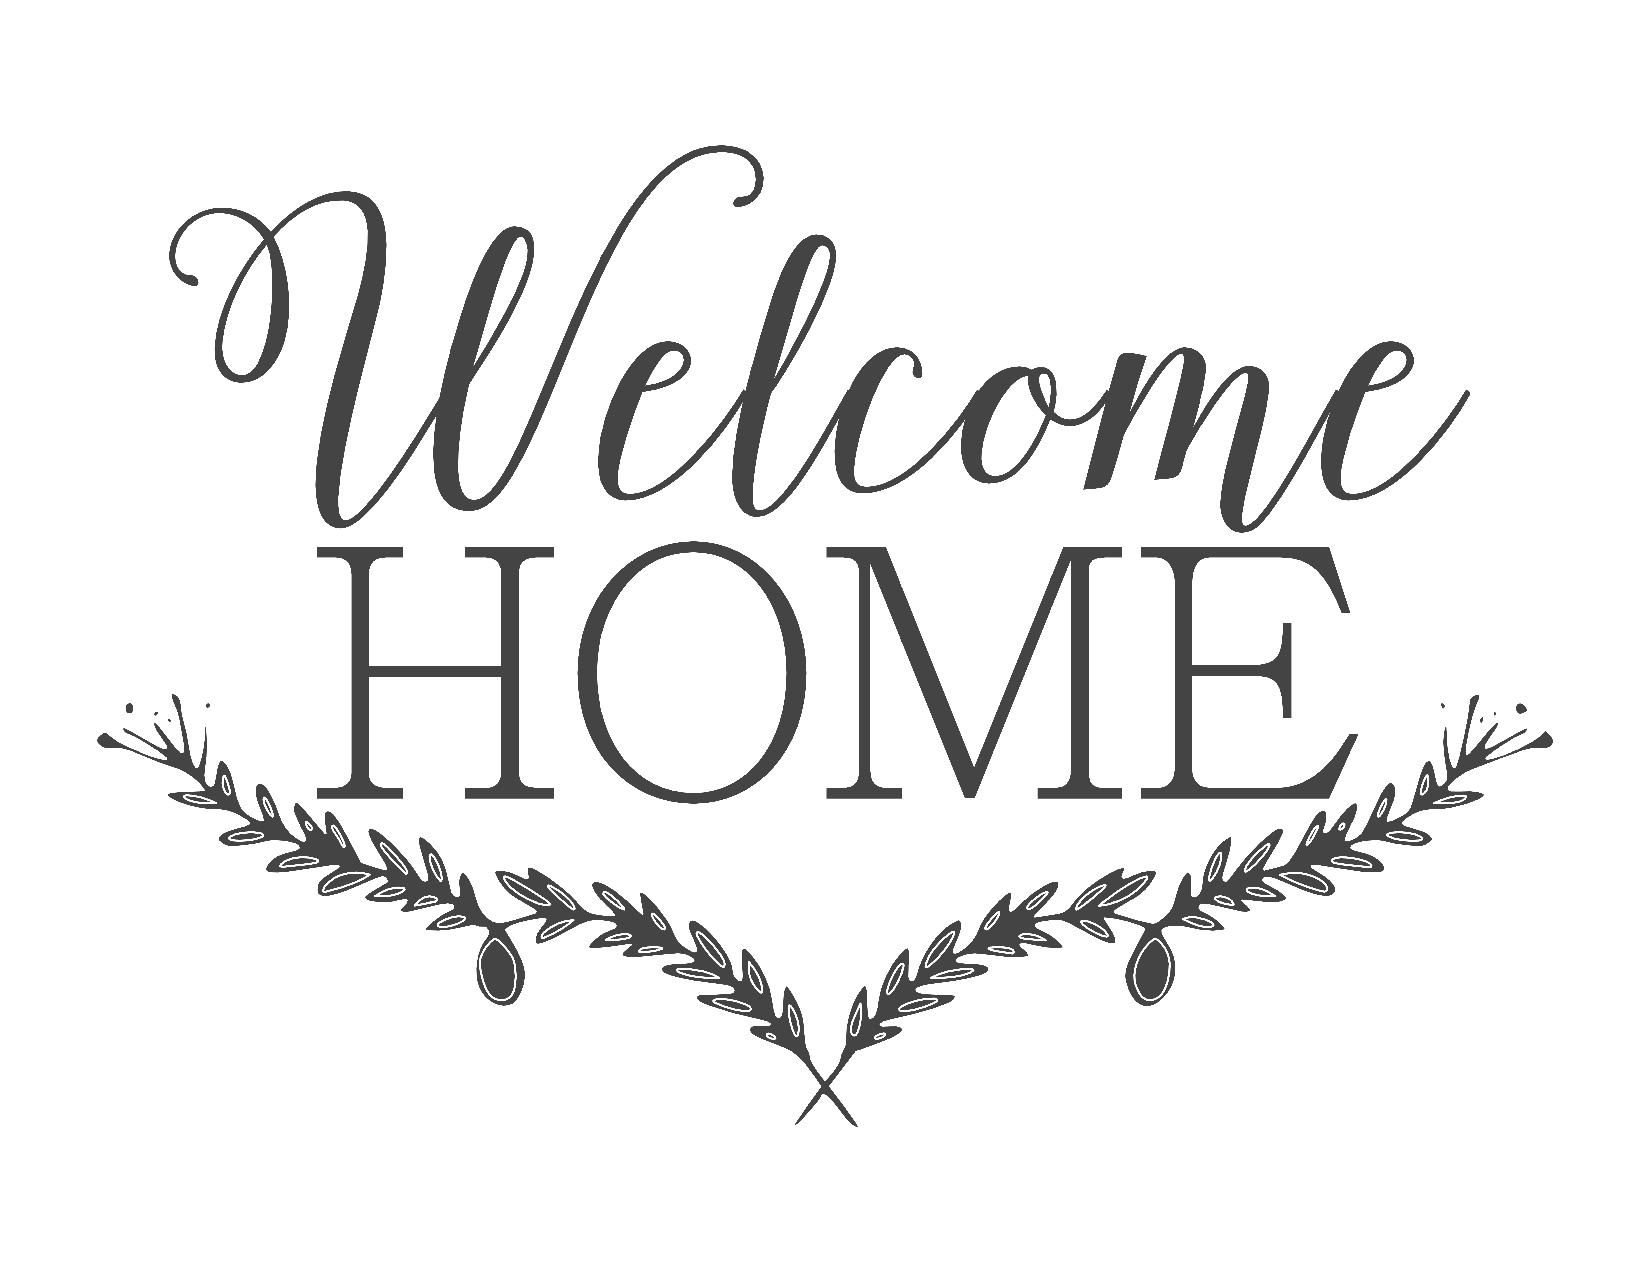 Welcome to love. Надпись Home. Надписи в скандинавском стиле. Красивые надписи для дома. Надпись Sweet Home.